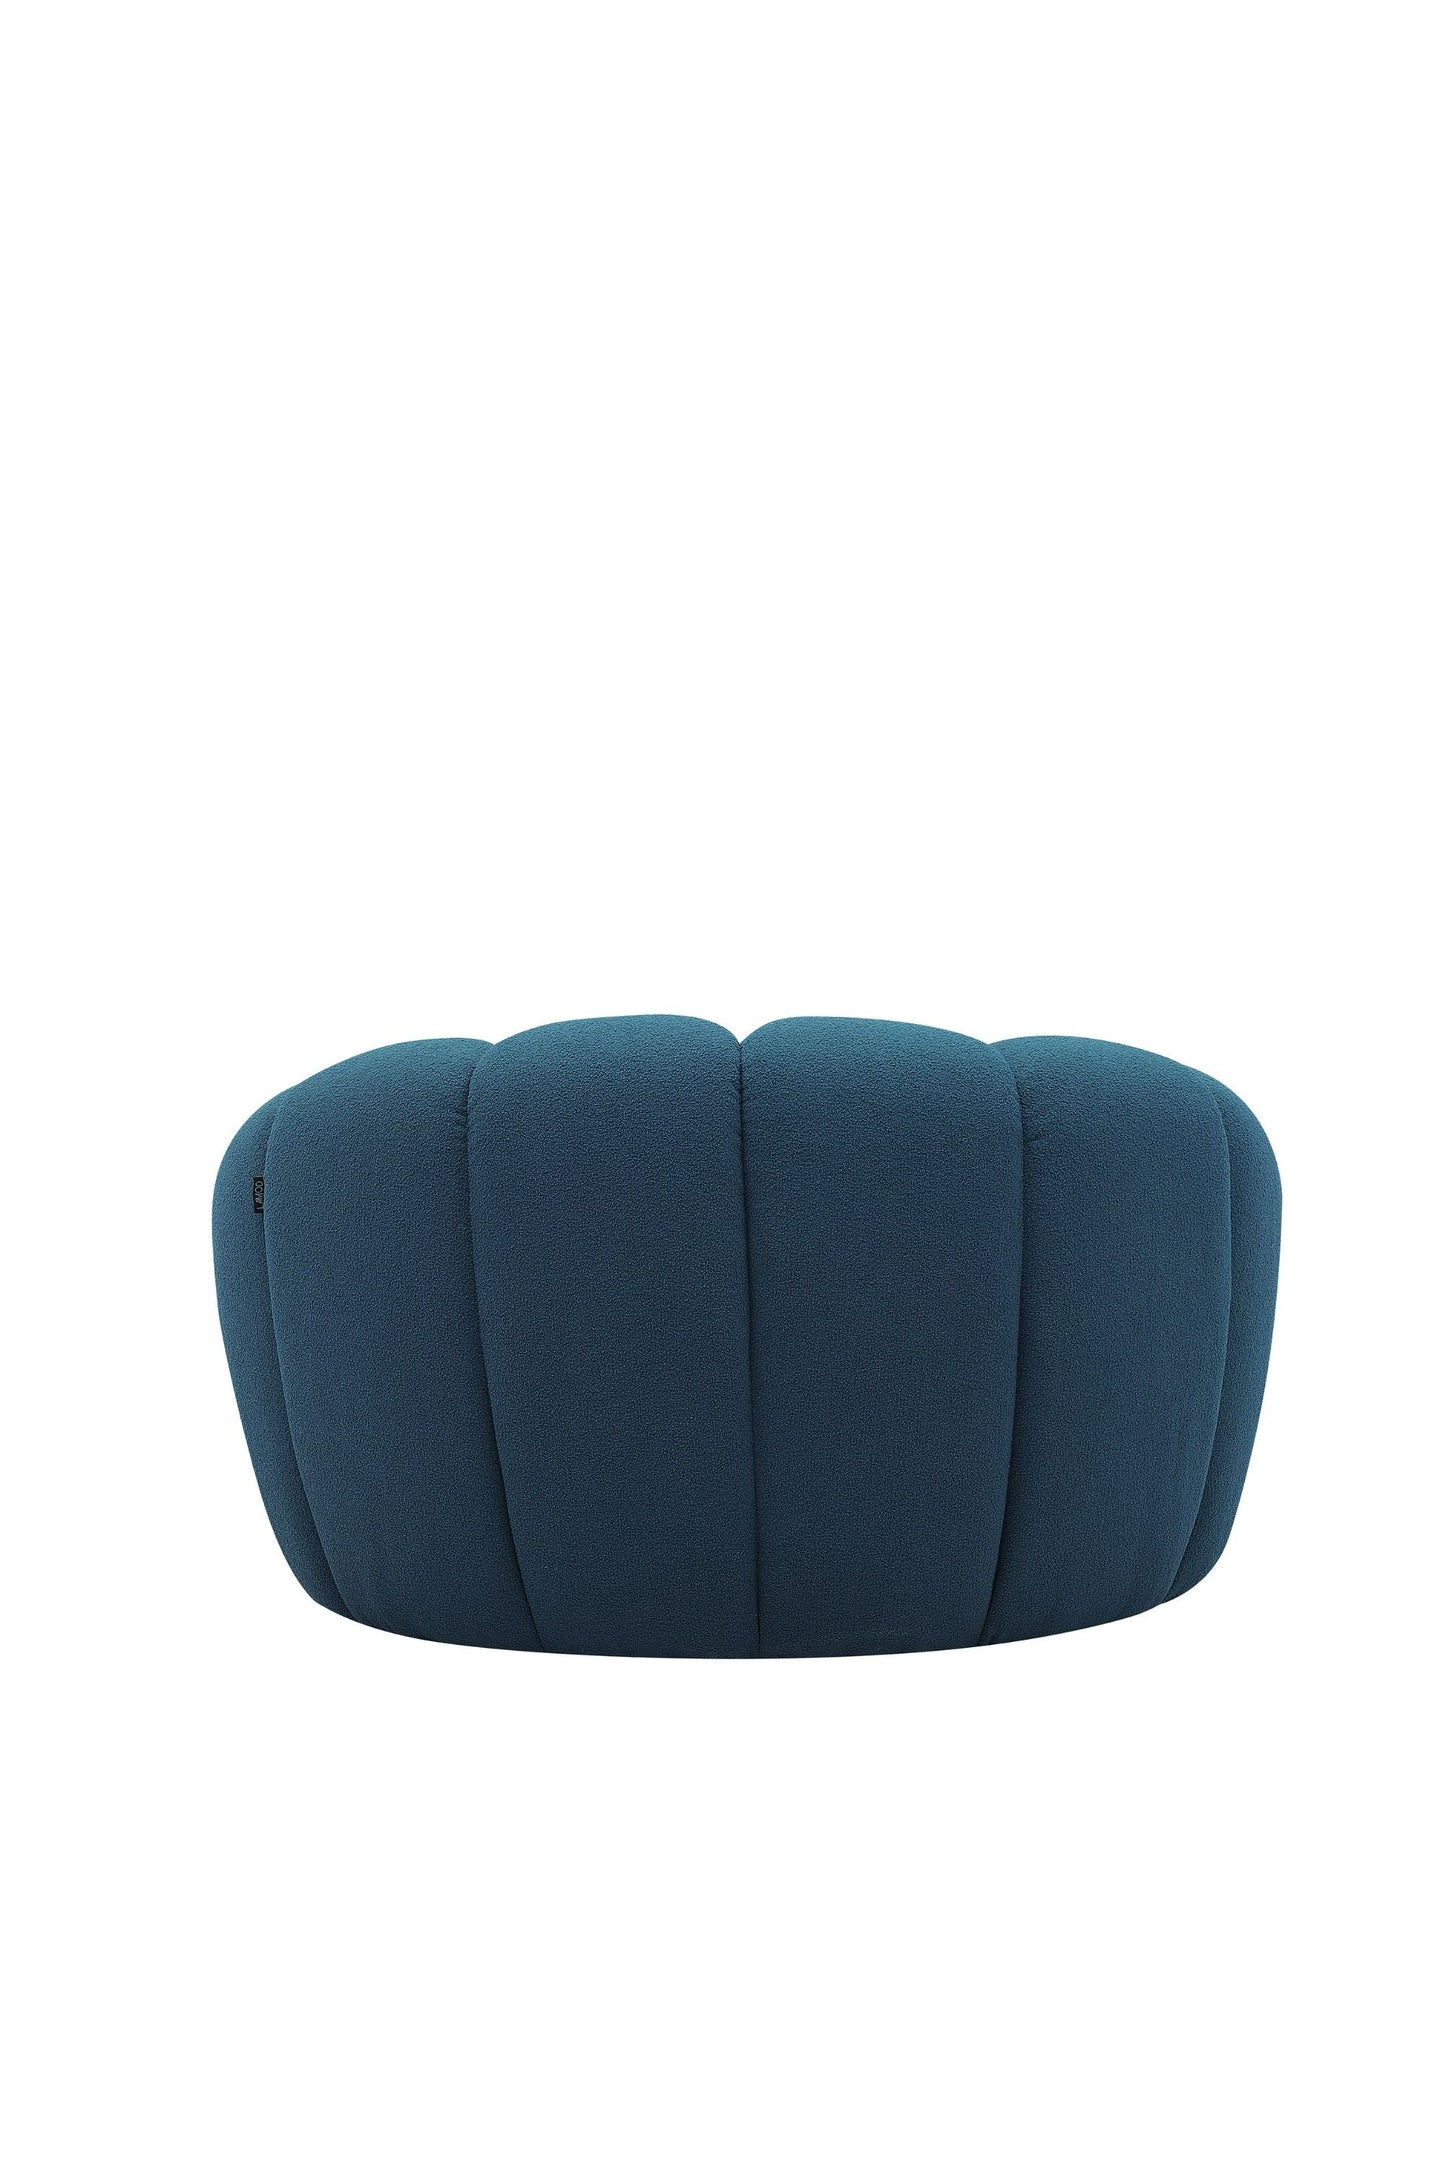 Divani Casa Yolonda - Modern Curved Dark Teal Fabric Chair